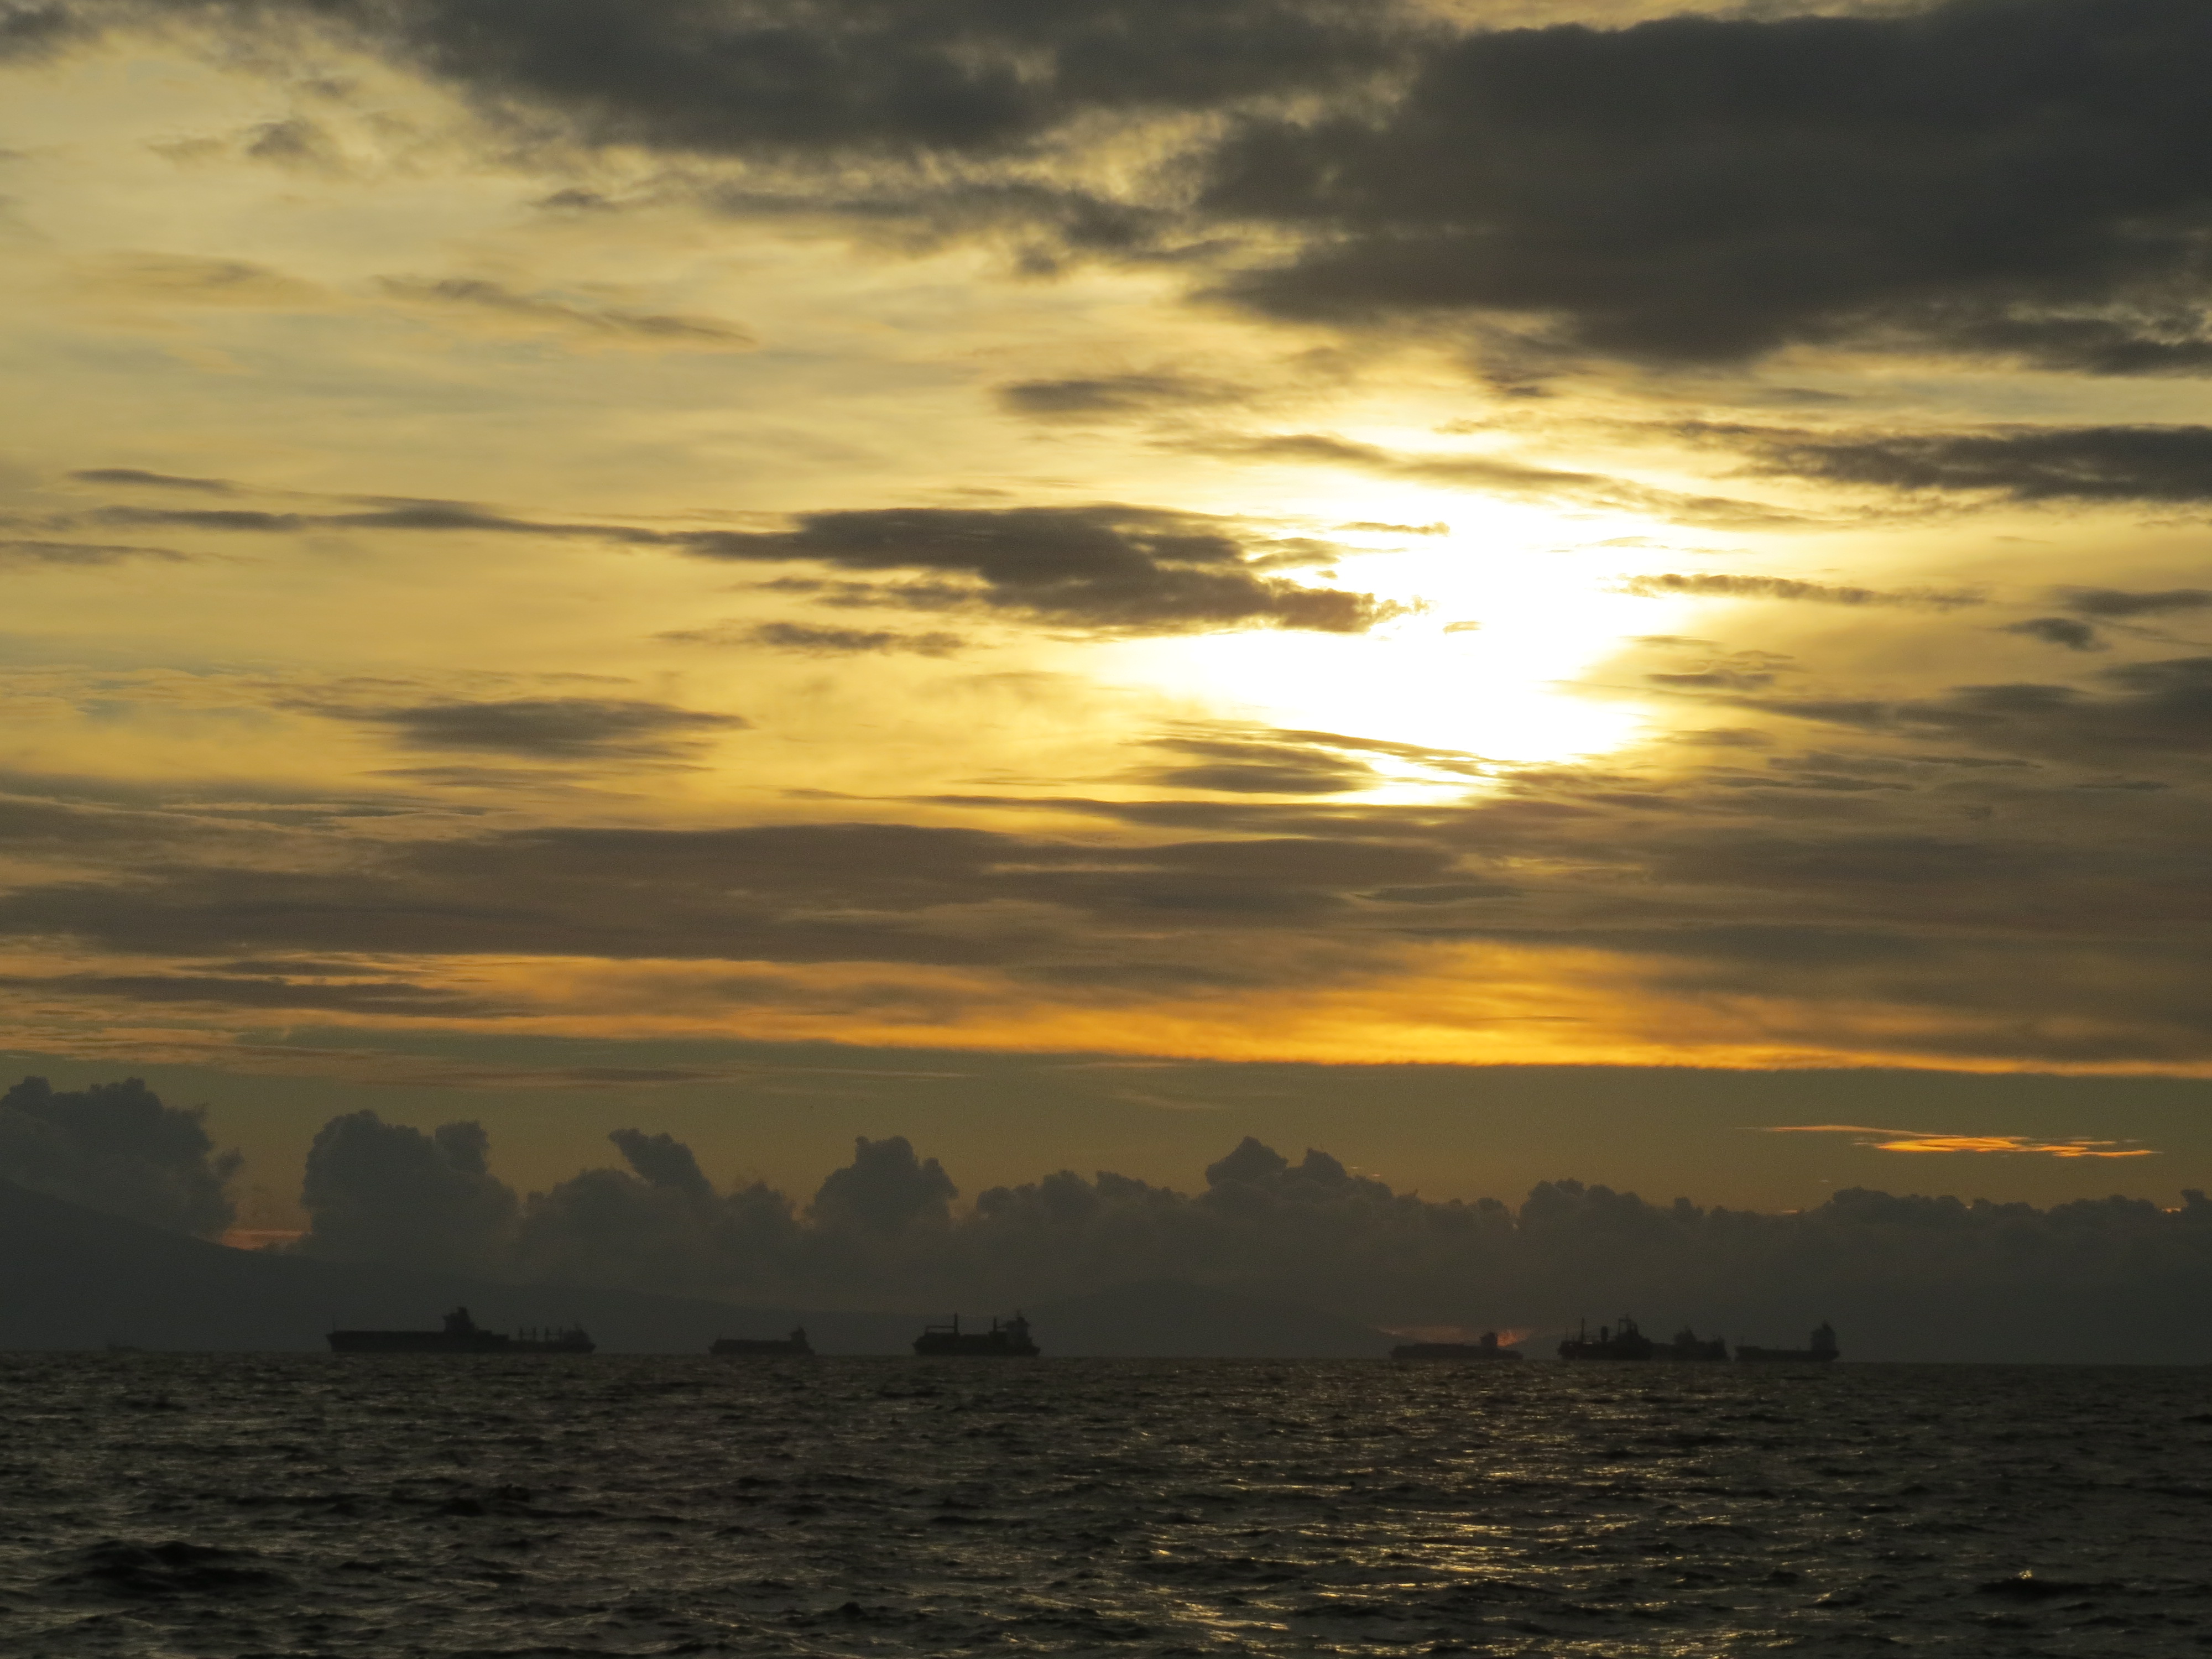 Ships on the horizon waiting in Manila Bay